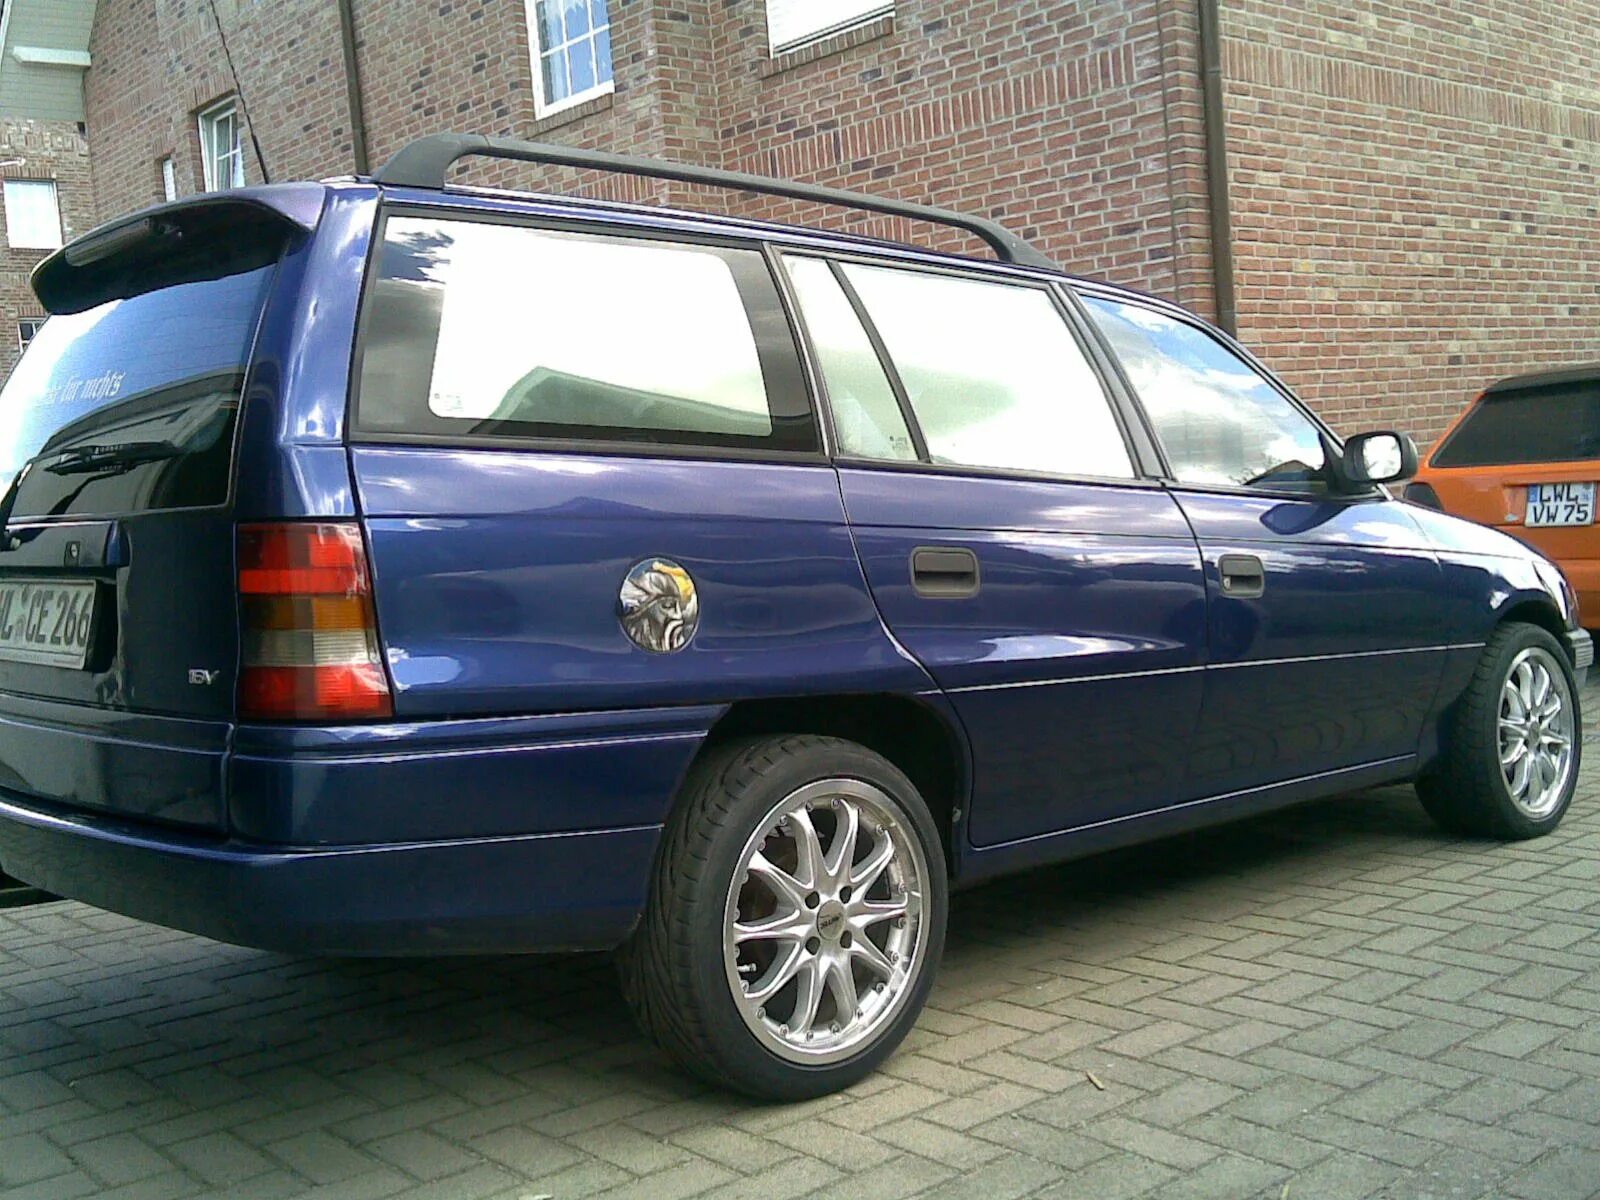 Опель караван универсал. Opel Astra Caravan универсал 1997. Opel Astra f 1997 универсал.